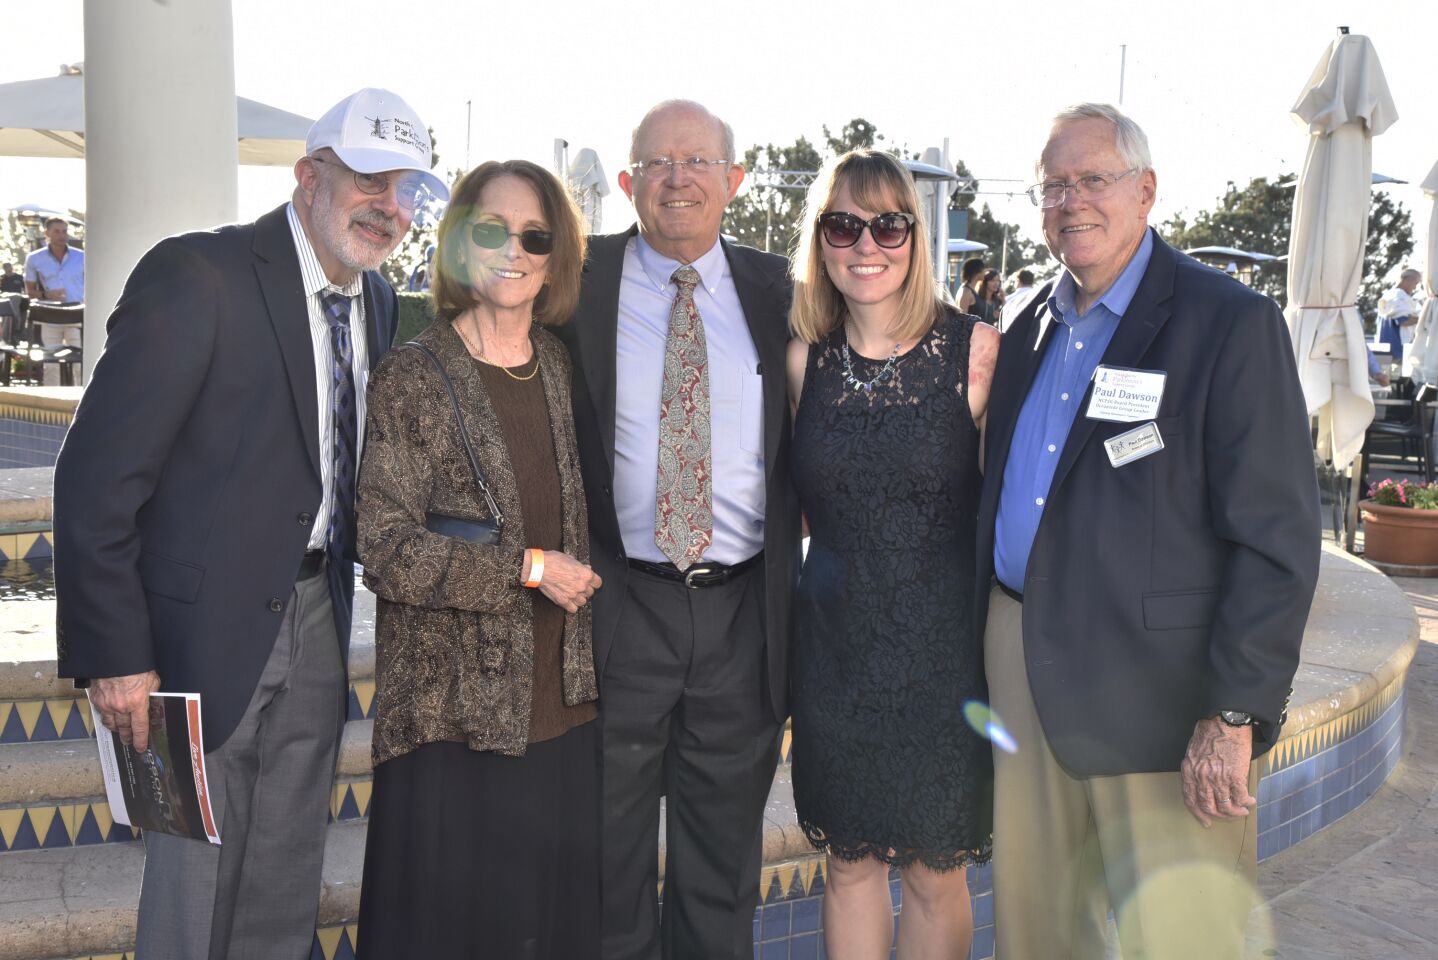 Steve Reiter, Linda and Rick Ankrom, Elizabeth Wilson-Manahan, Parkinson’s Association of San Diego board member/North County Support Group President Paul Dawson